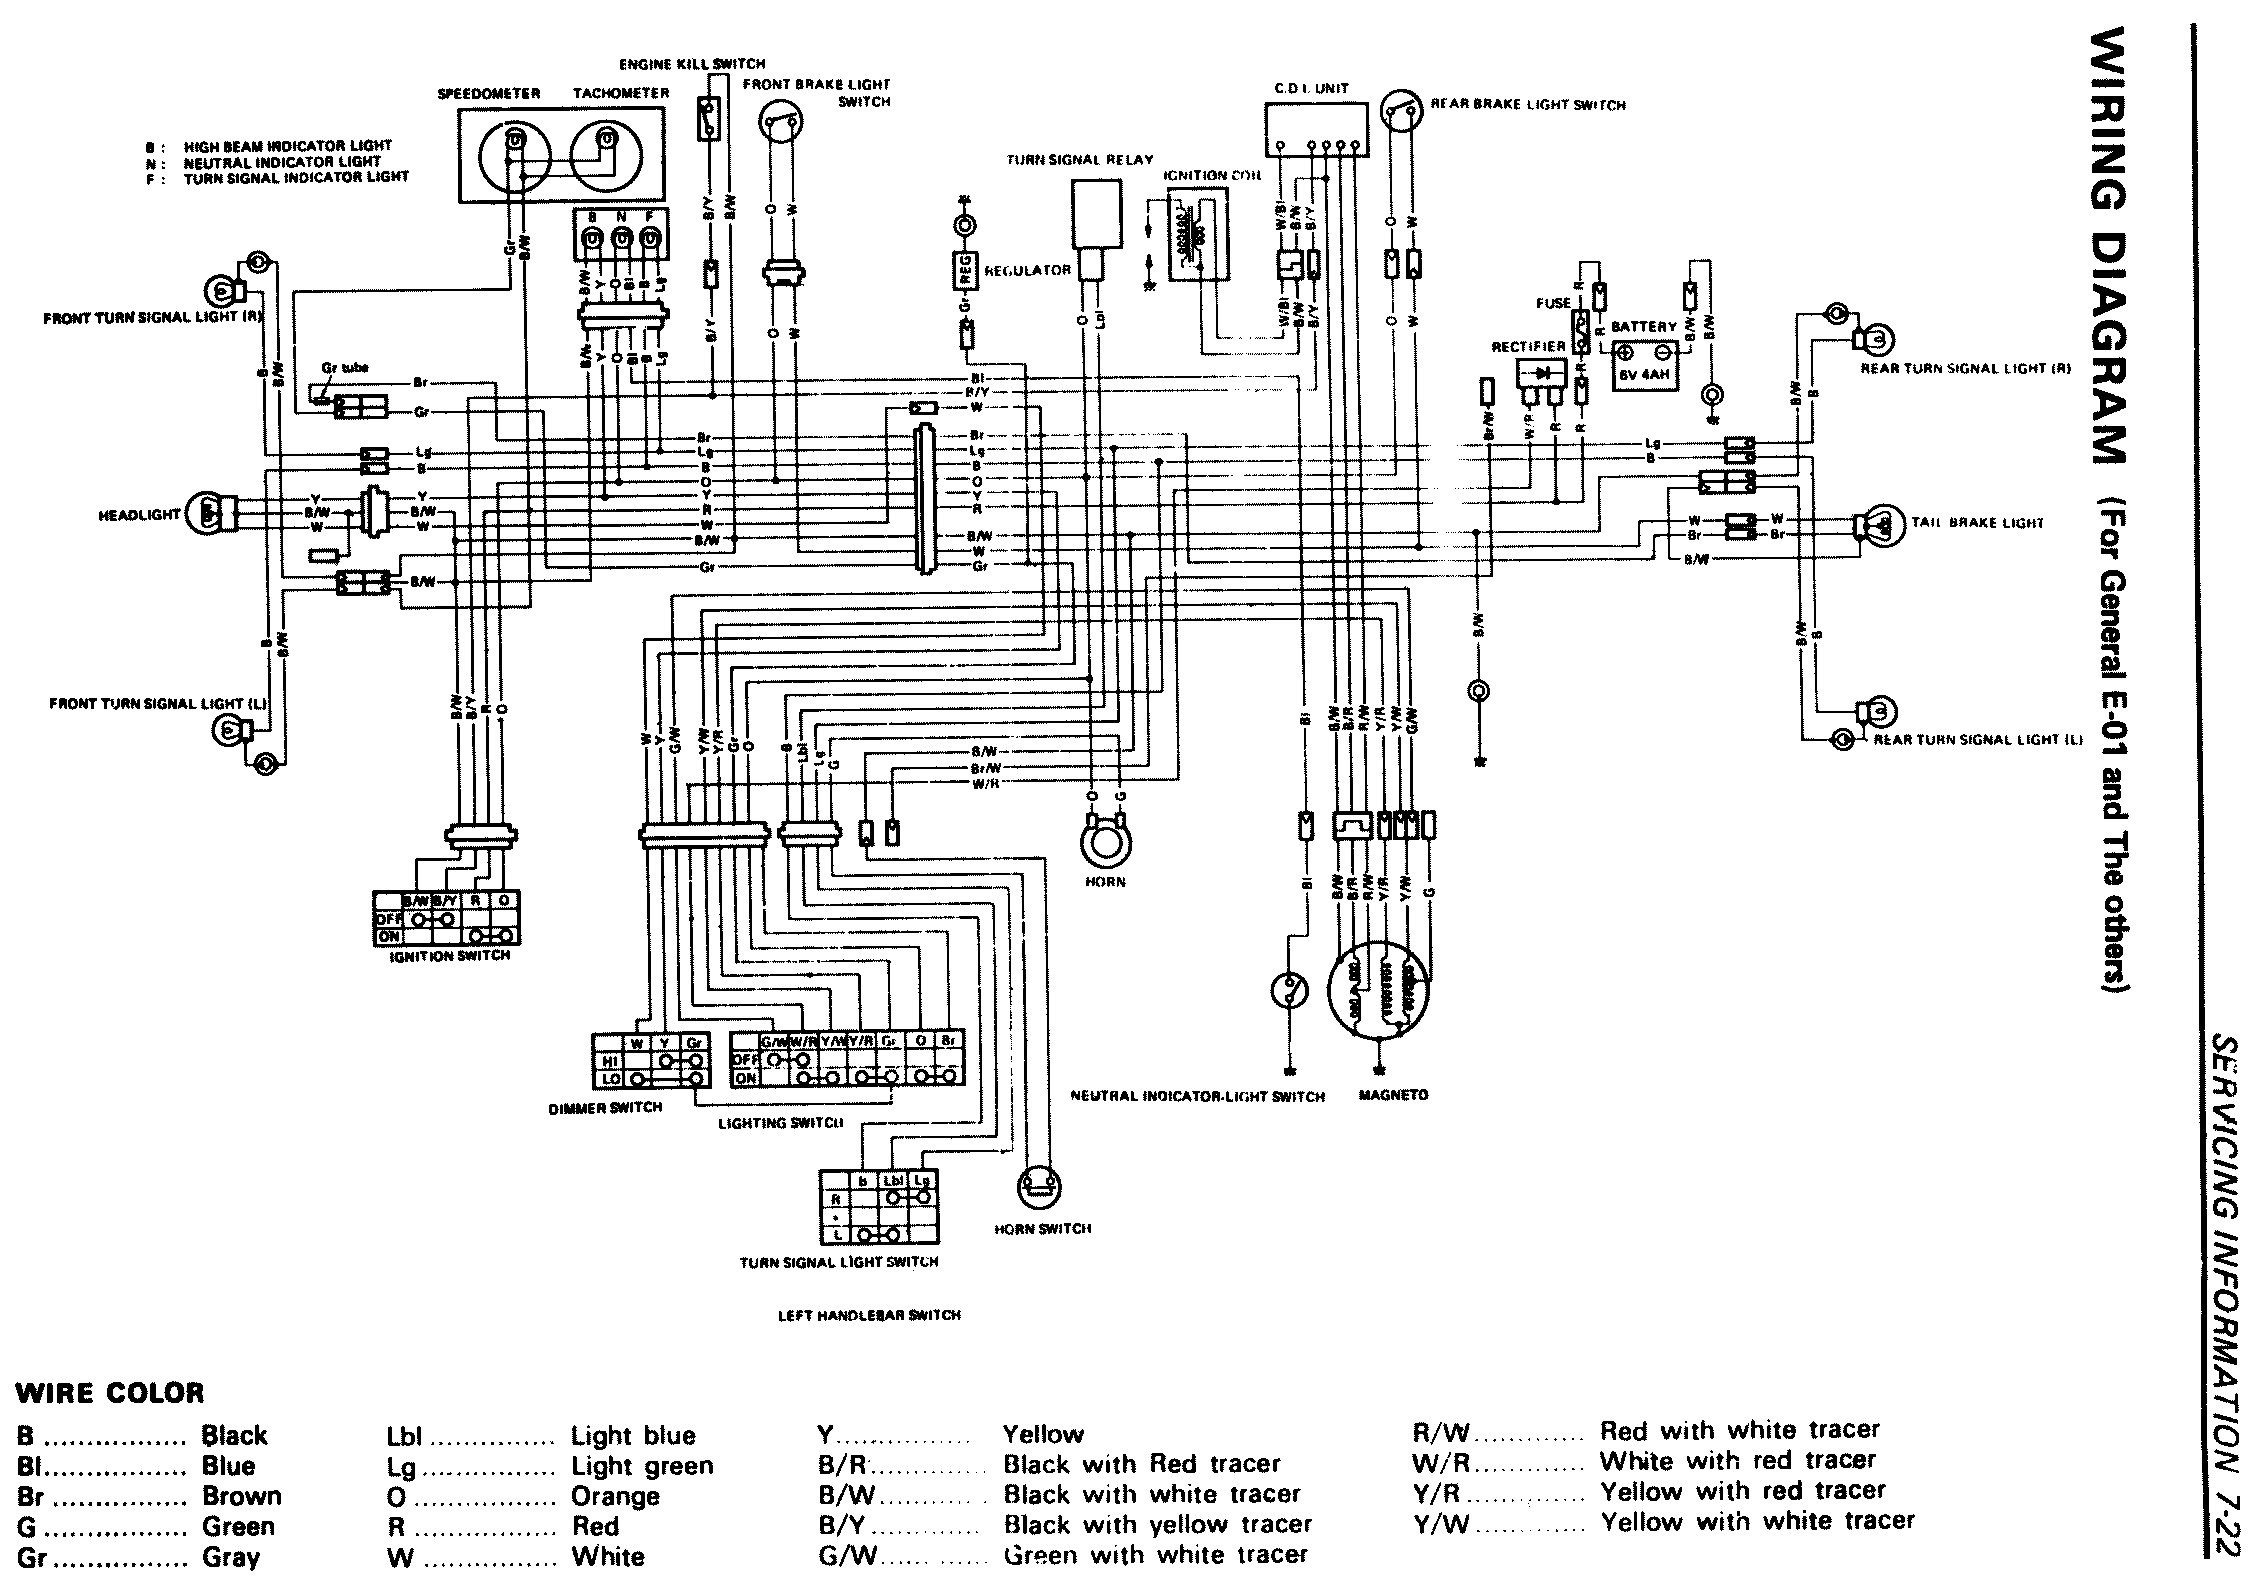 1982 Suzuki Gs450 Wiring Diagram from detoxicrecenze.com